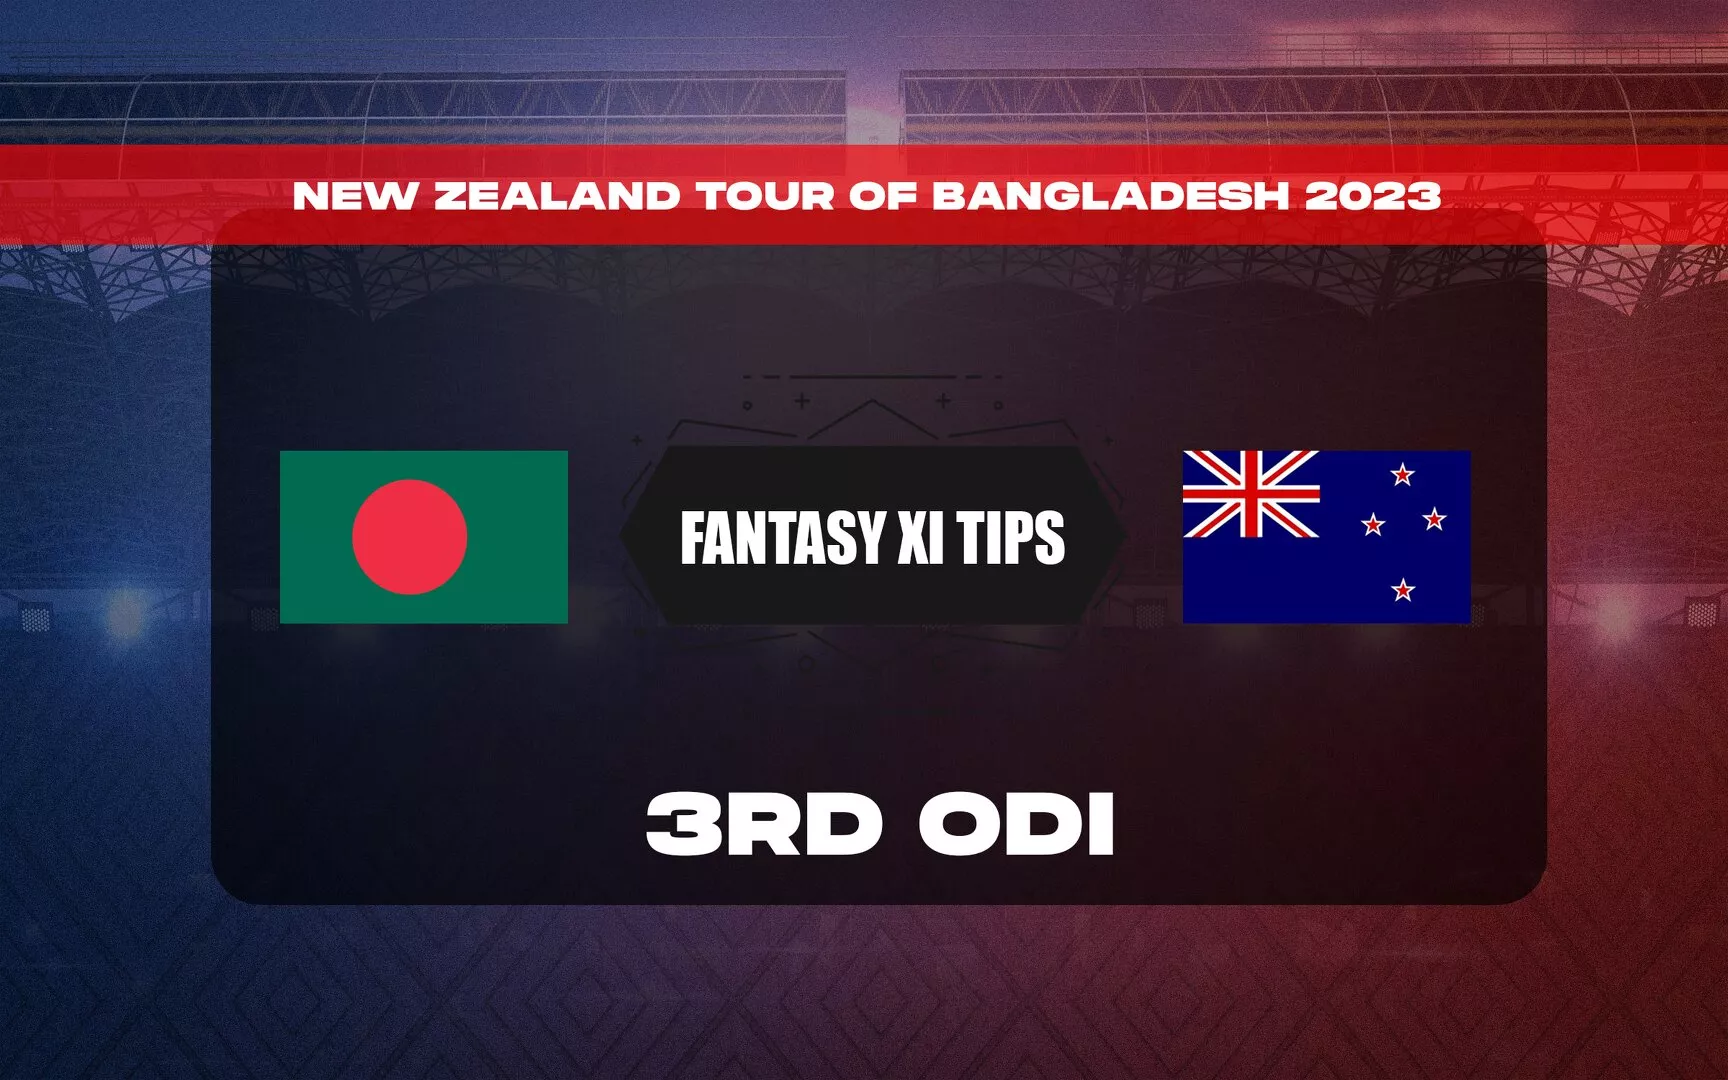 BAN vs NZ Dream11 Prediction, Dream11 Playing XI, Today 3rd ODI, New Zealand tour of Bangladesh 2023